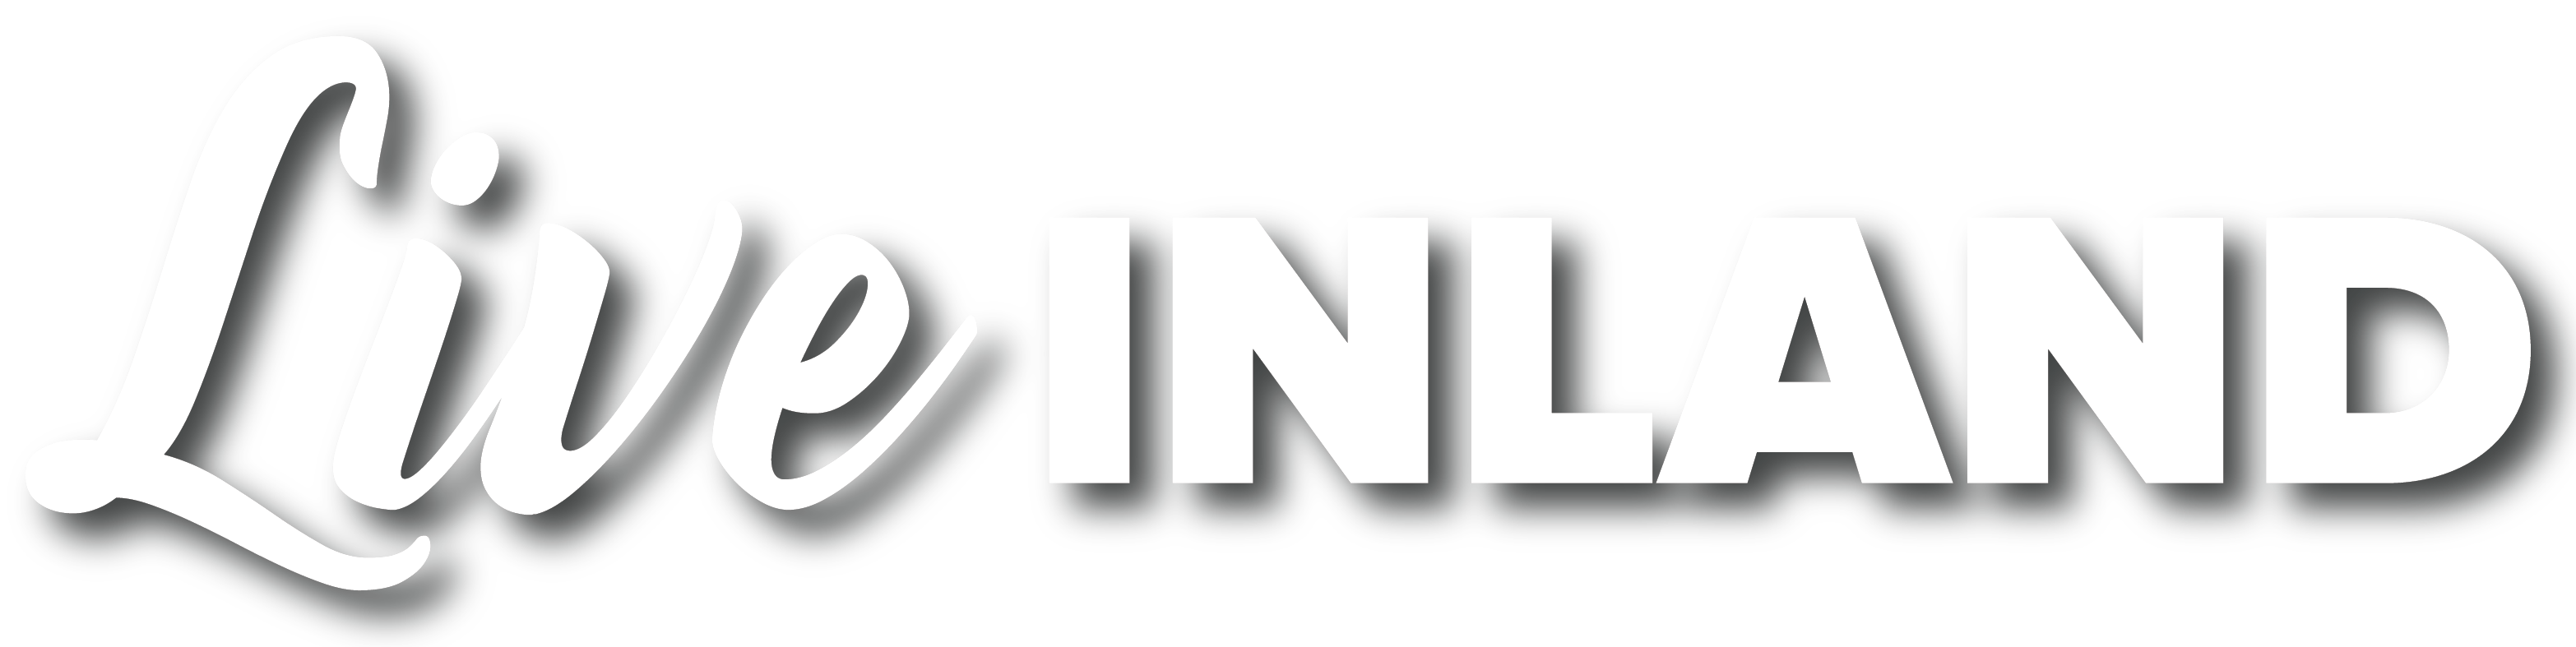 live_inland_logo-01